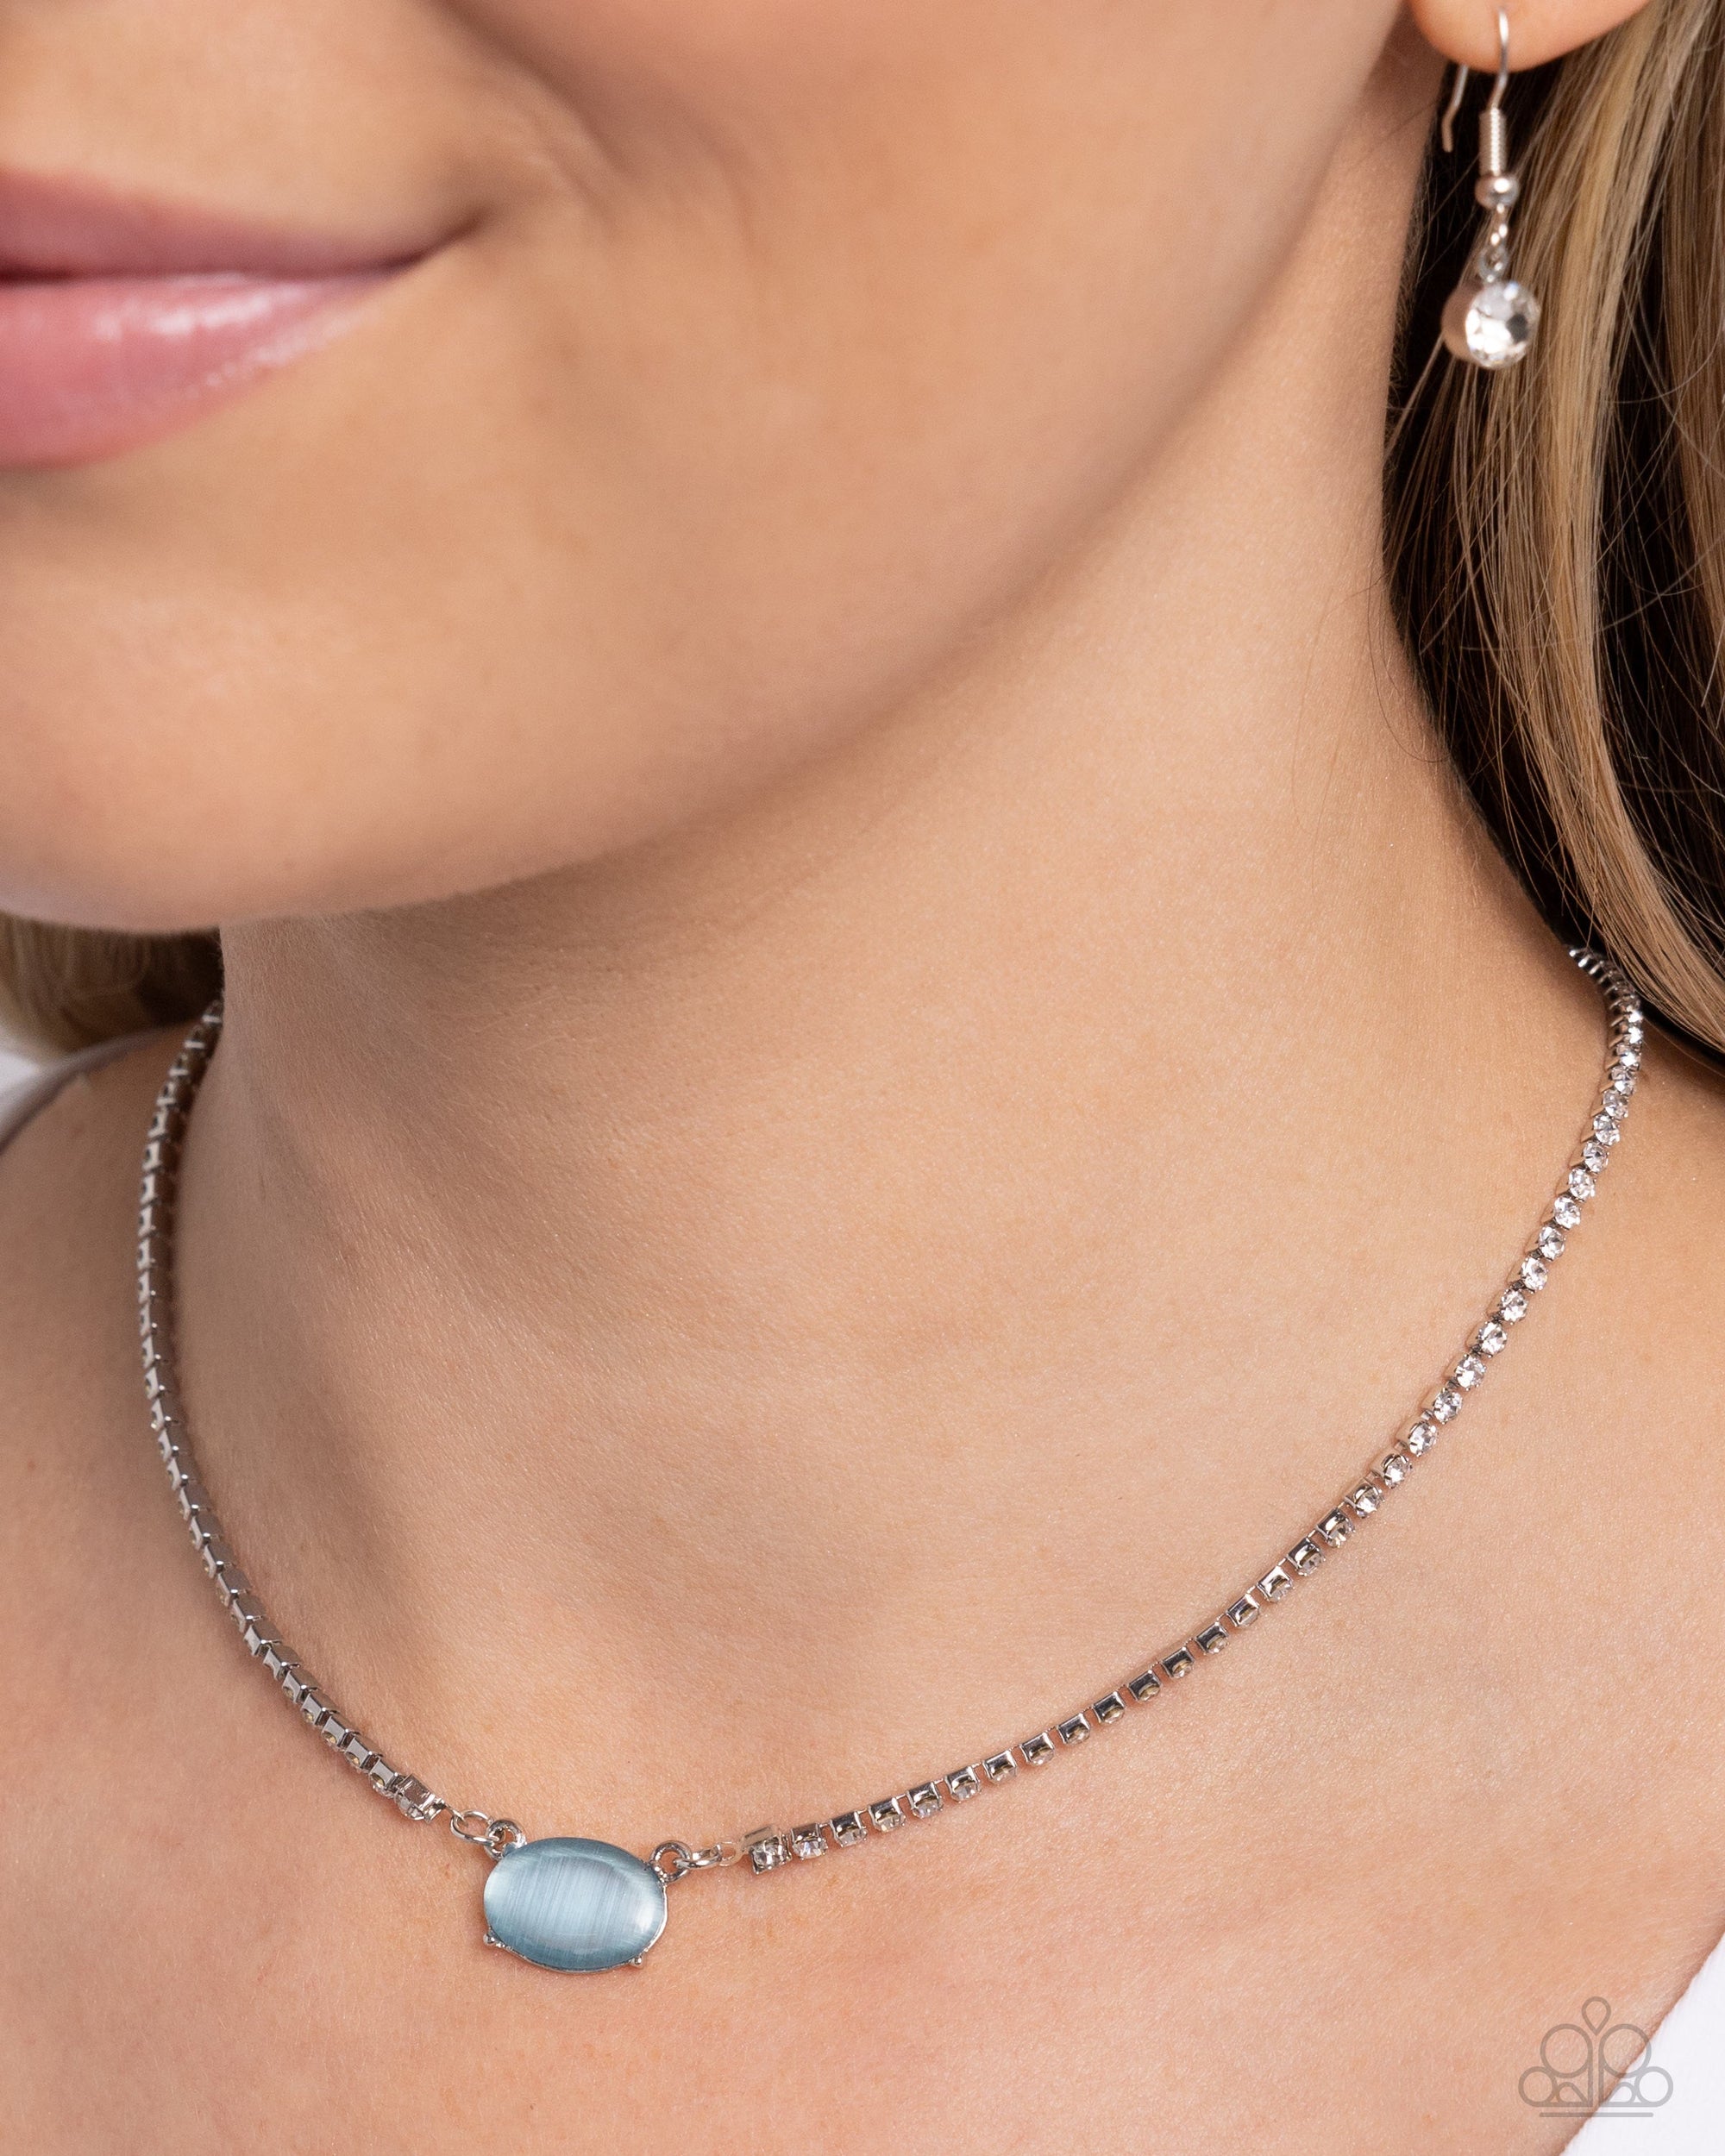 Dynamic Delicacy Blue Cat's Eye & White Rhinestone Necklace - Paparazzi Accessories- lightbox - CarasShop.com - $5 Jewelry by Cara Jewels